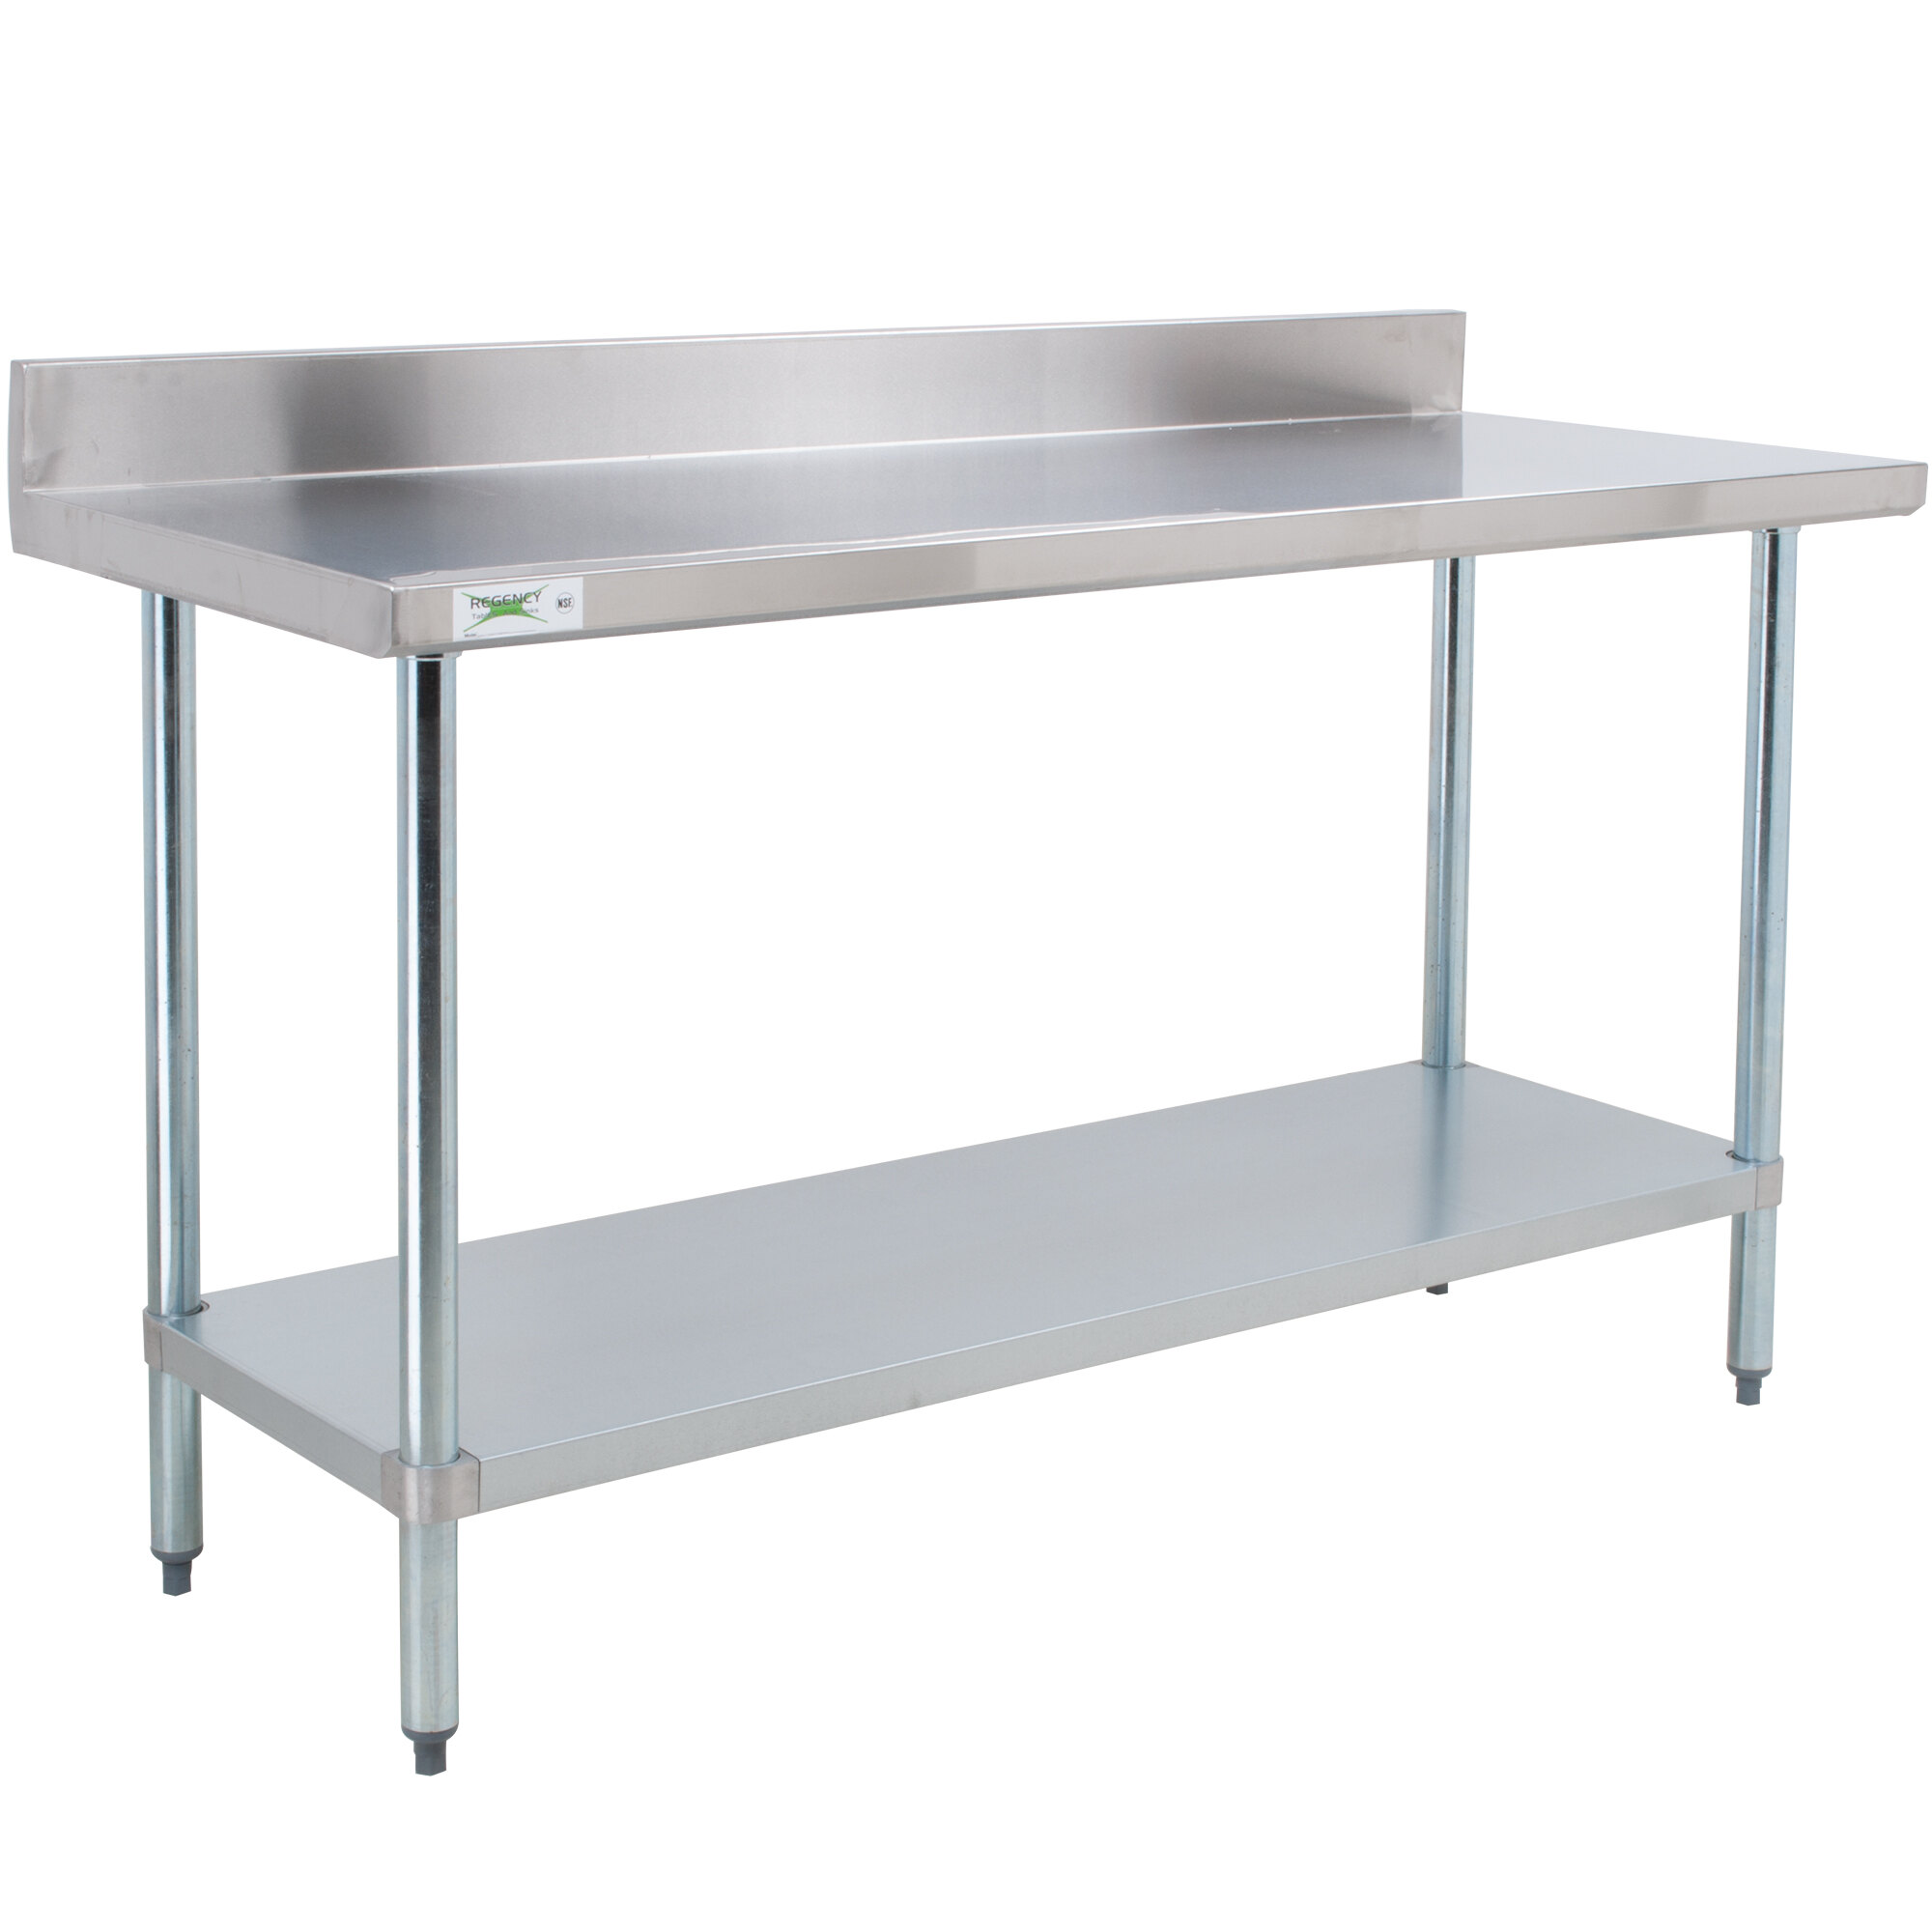 24" x 24" Stainless Steel Work Prep Shelf Table With Backsplash Commercial NSF